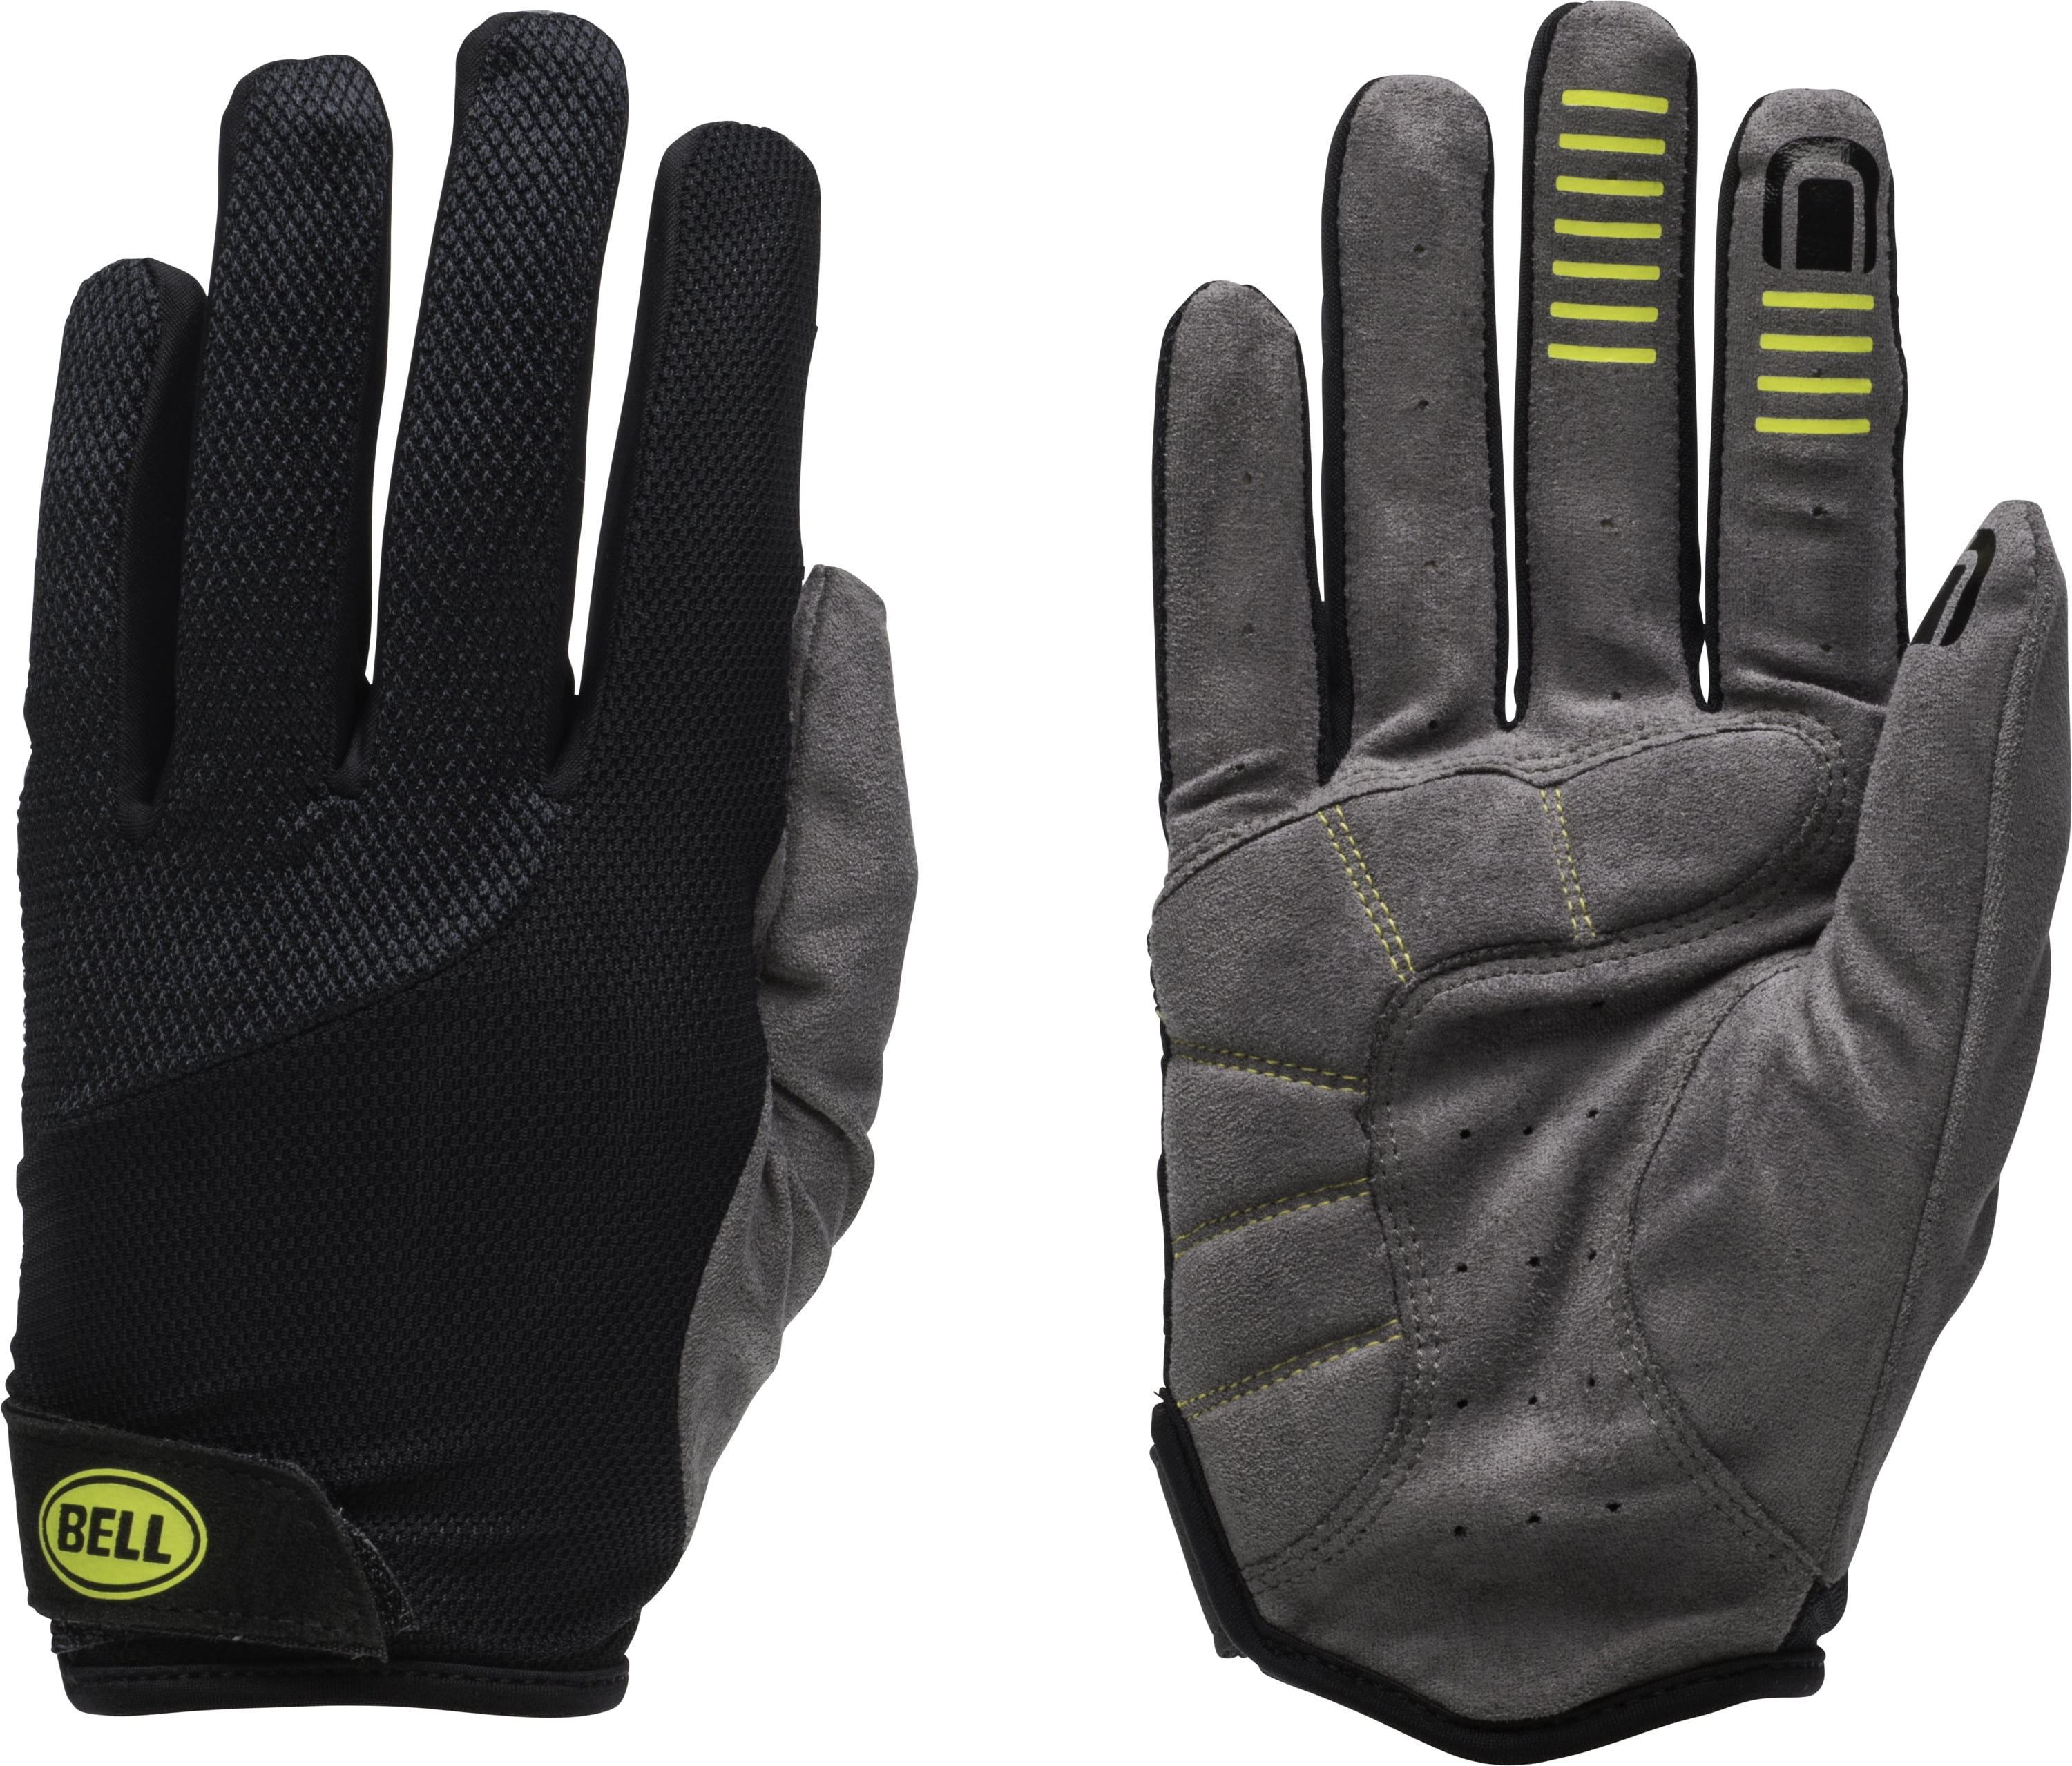 Bell ramble 500 performance cycling gloves L-XL 